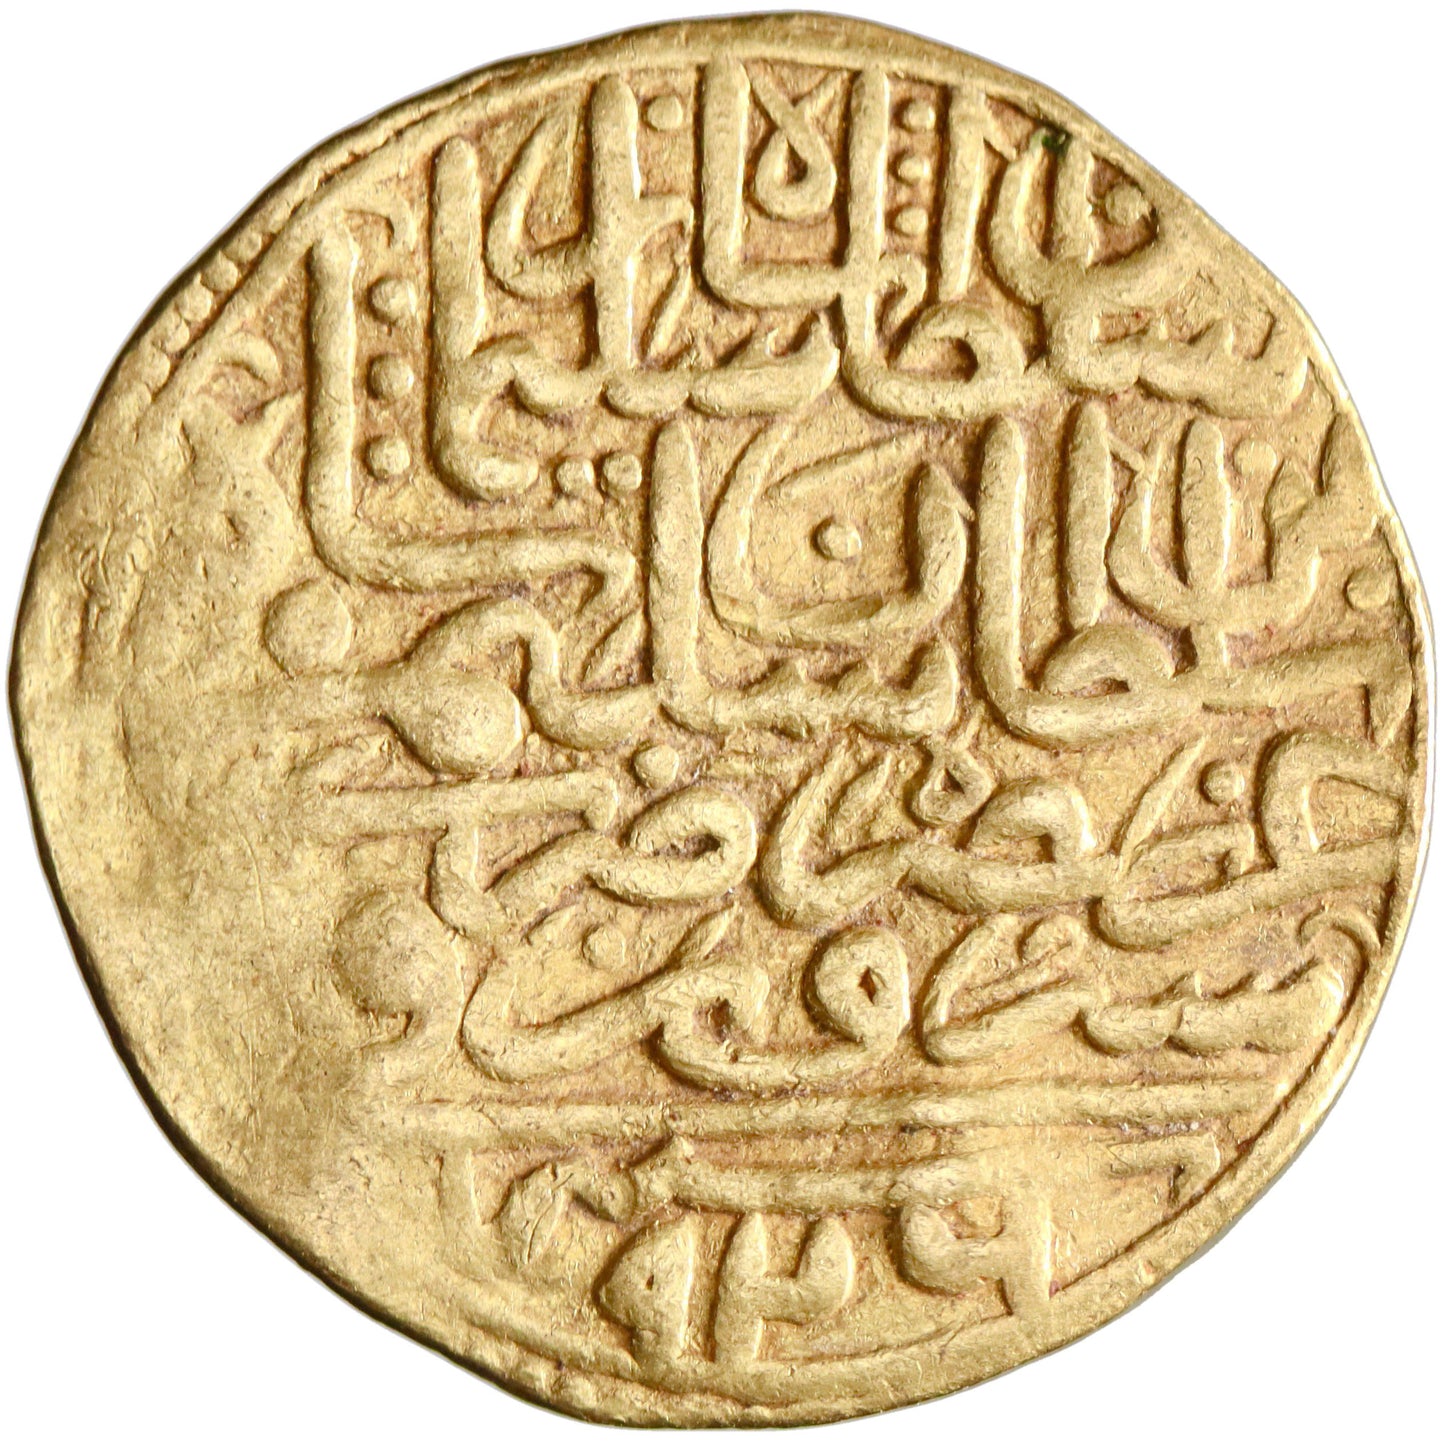 Ottoman, Suleyman I, gold sultani, Siroz (Siruz) mint, AH 926